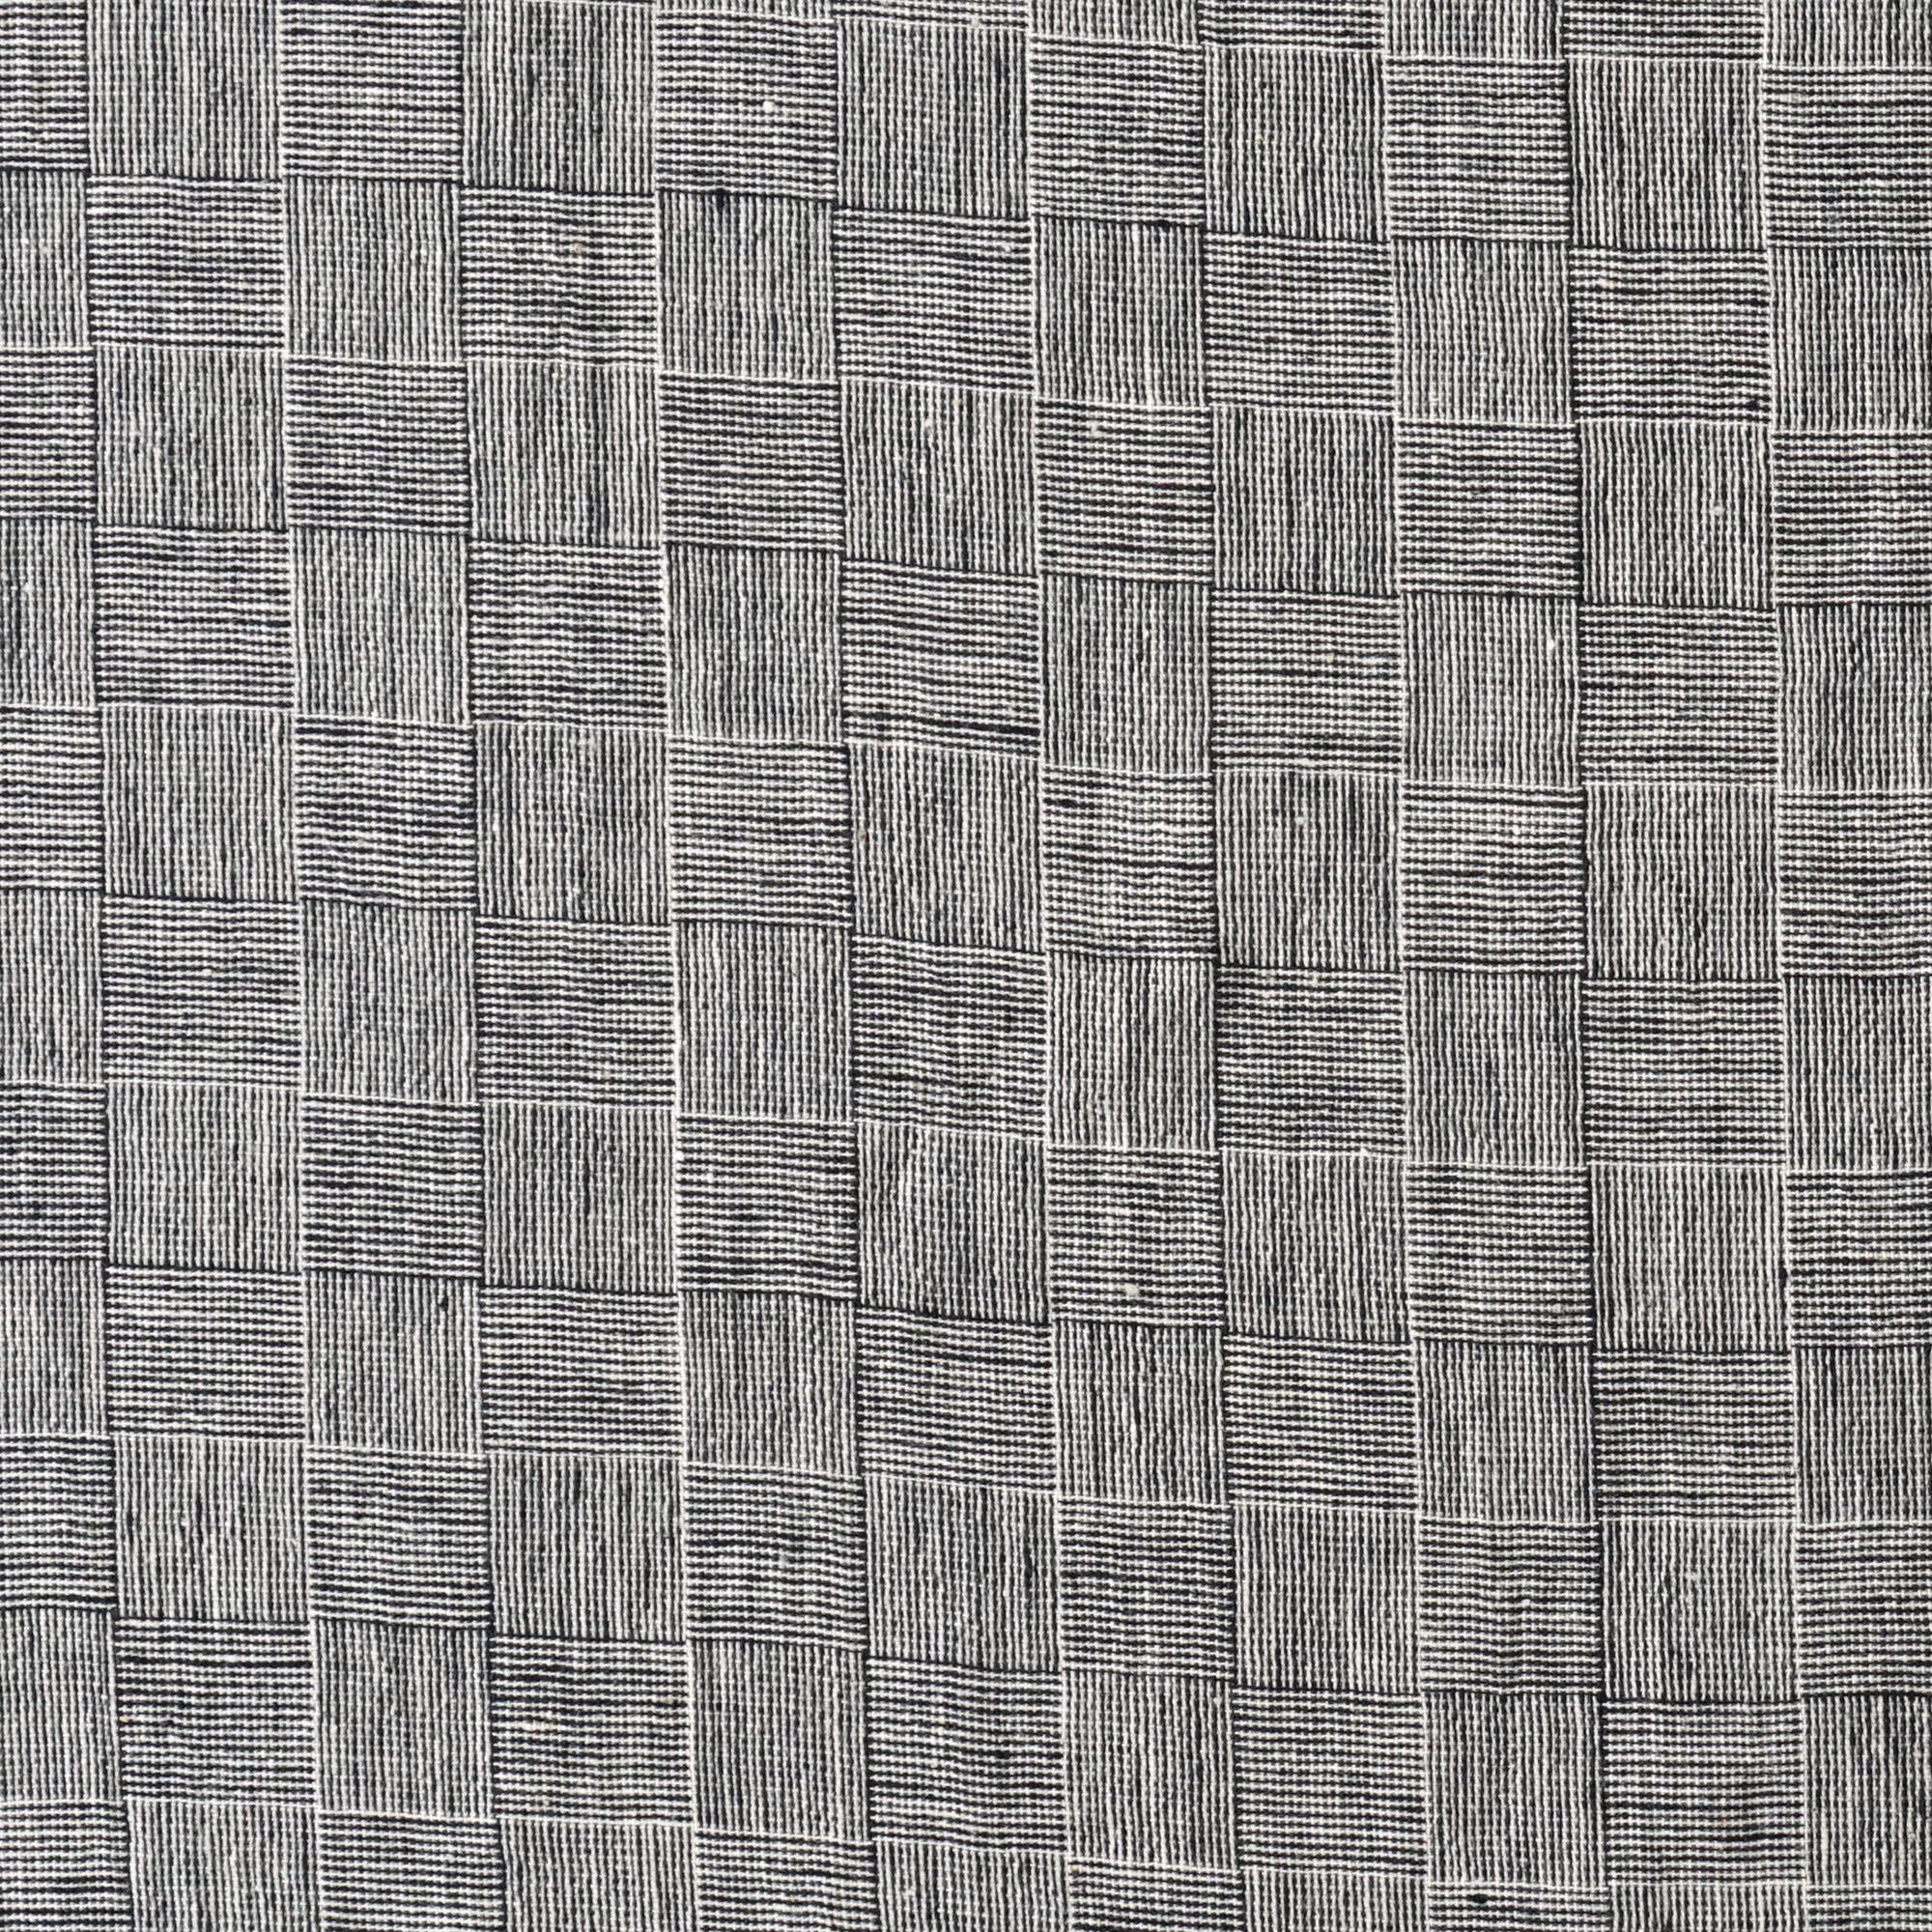 KJC12 - Indian Handloom-Woven Organic Kala Cotton Fabric - Plain 1 by 1 Weave - Checkers Design - Black Reactive Thread Dye - Flat